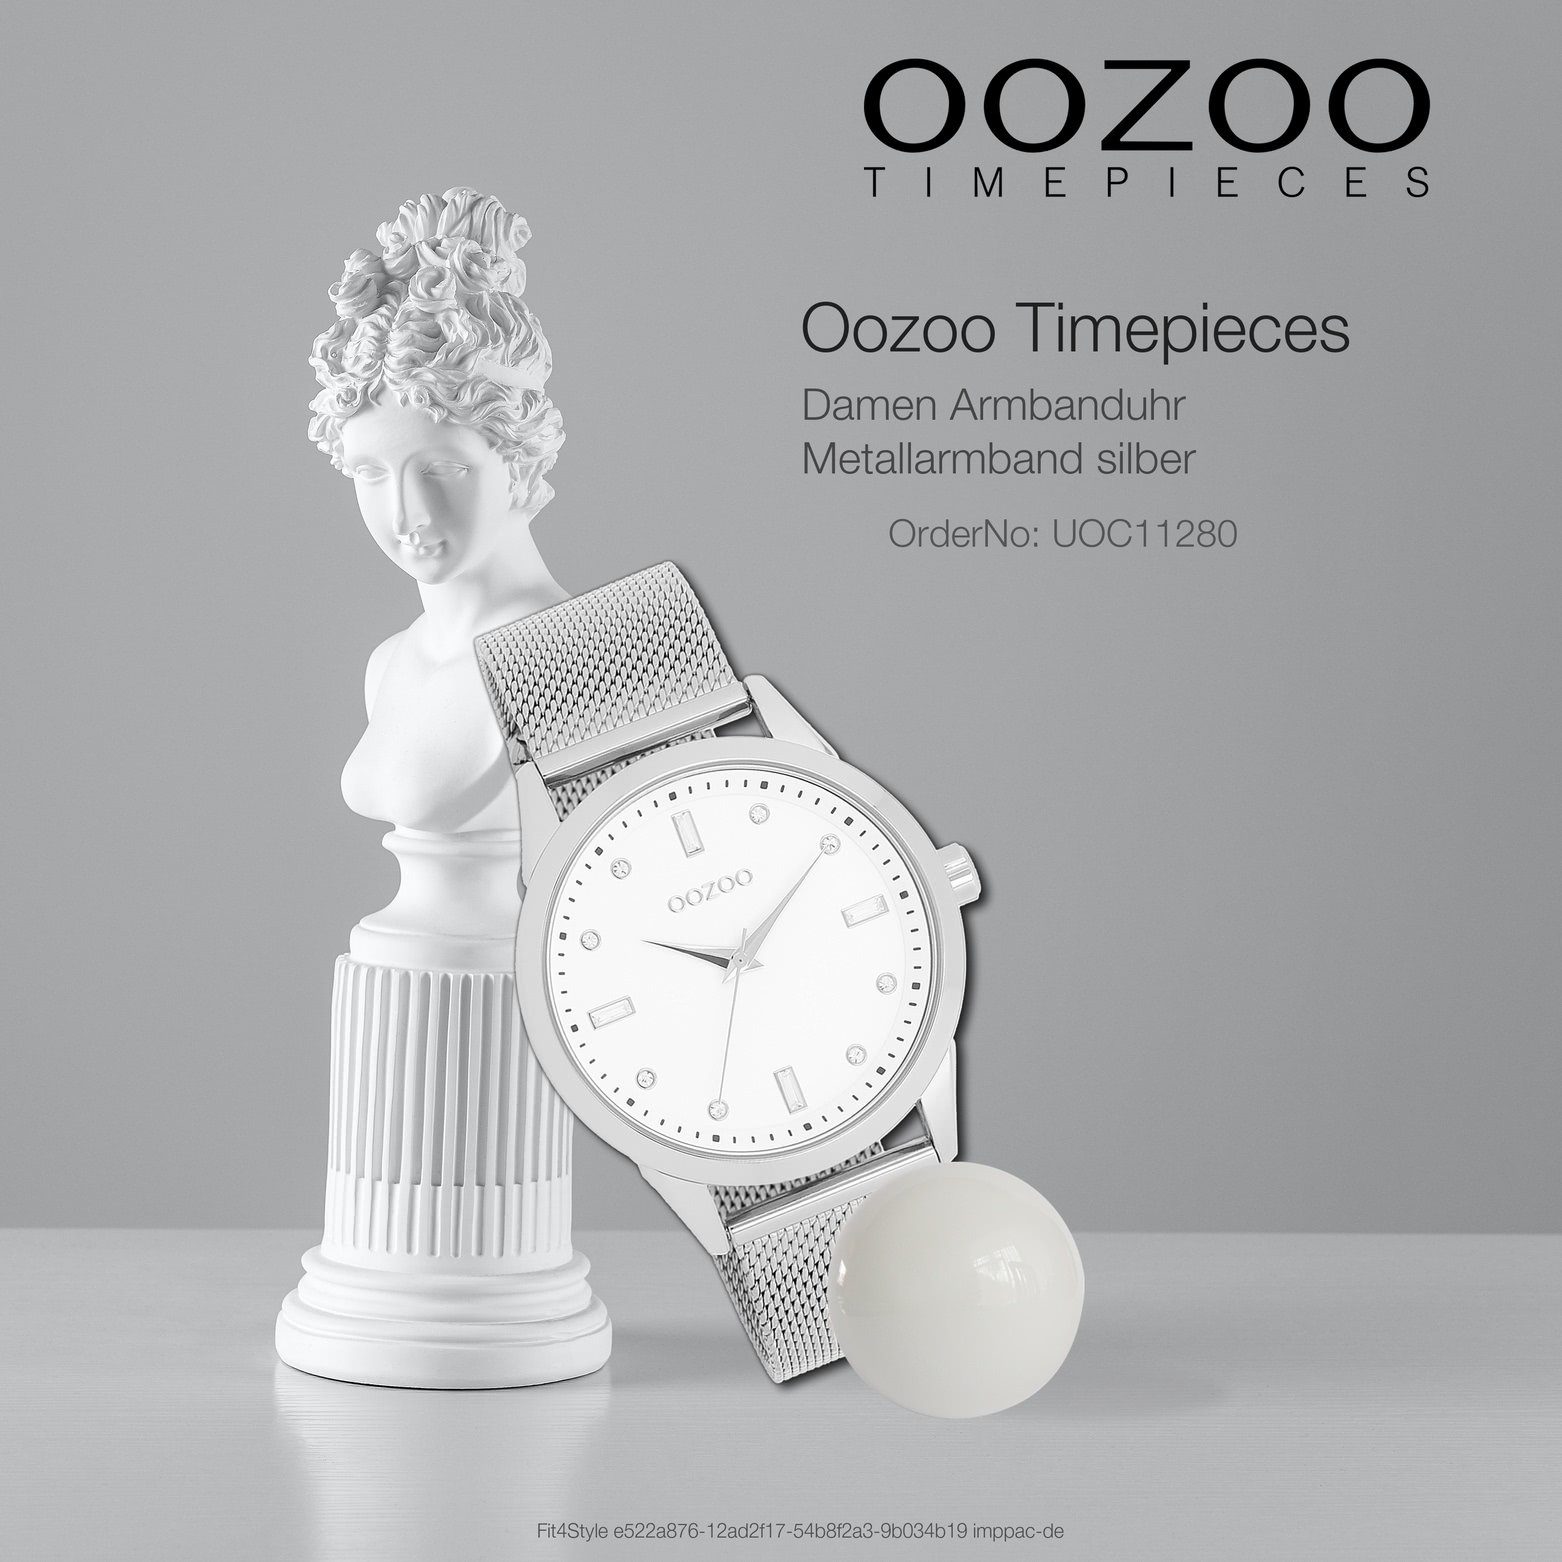 OOZOO Quarzuhr Metallarmband, Damenuhr (ca. Damen Fashion-Style 40mm) rund, groß Analog, Oozoo Armbanduhr Timepieces